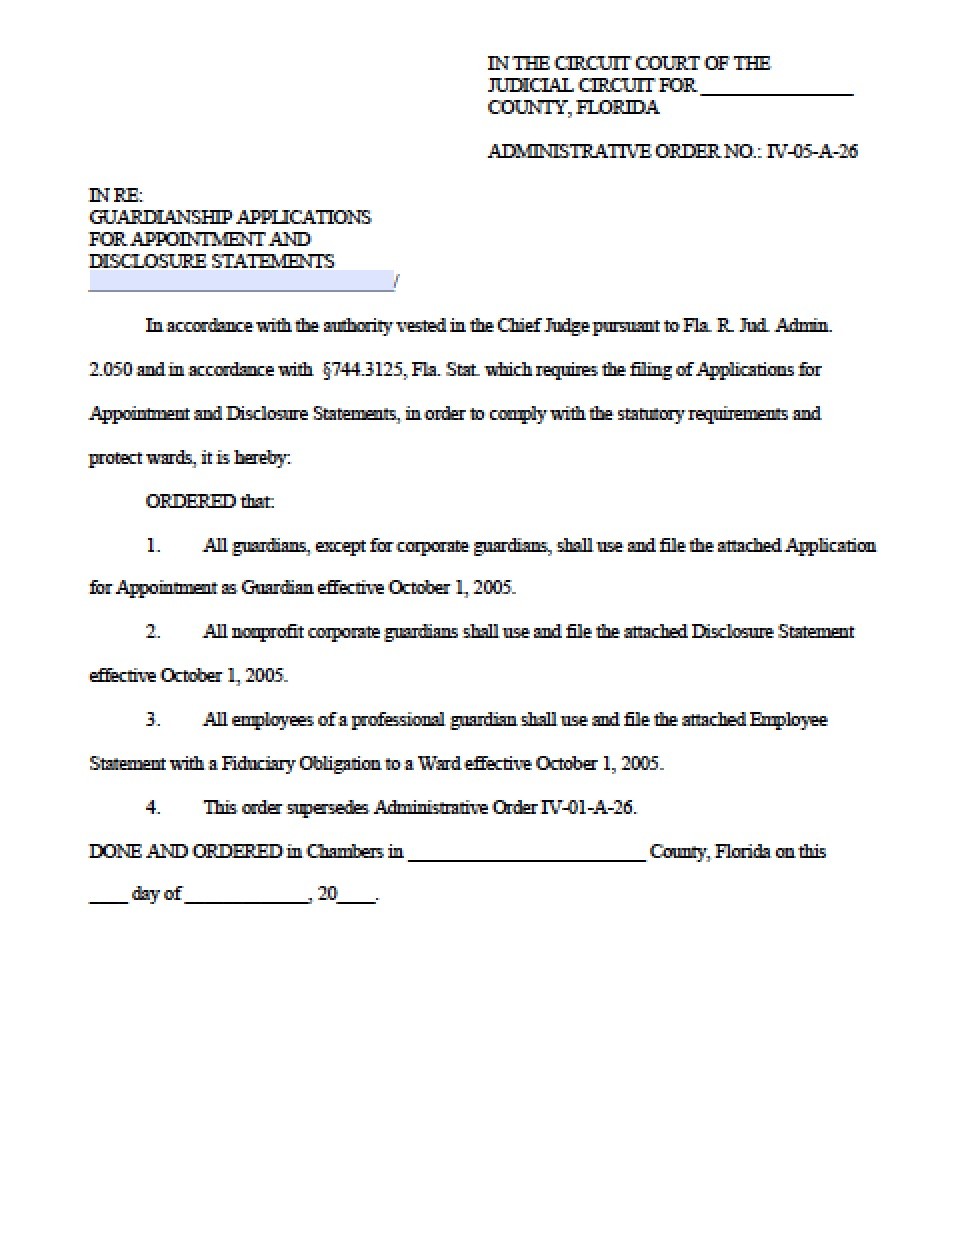 Florida Vehicle Power Of Attorney Form Document Dmv